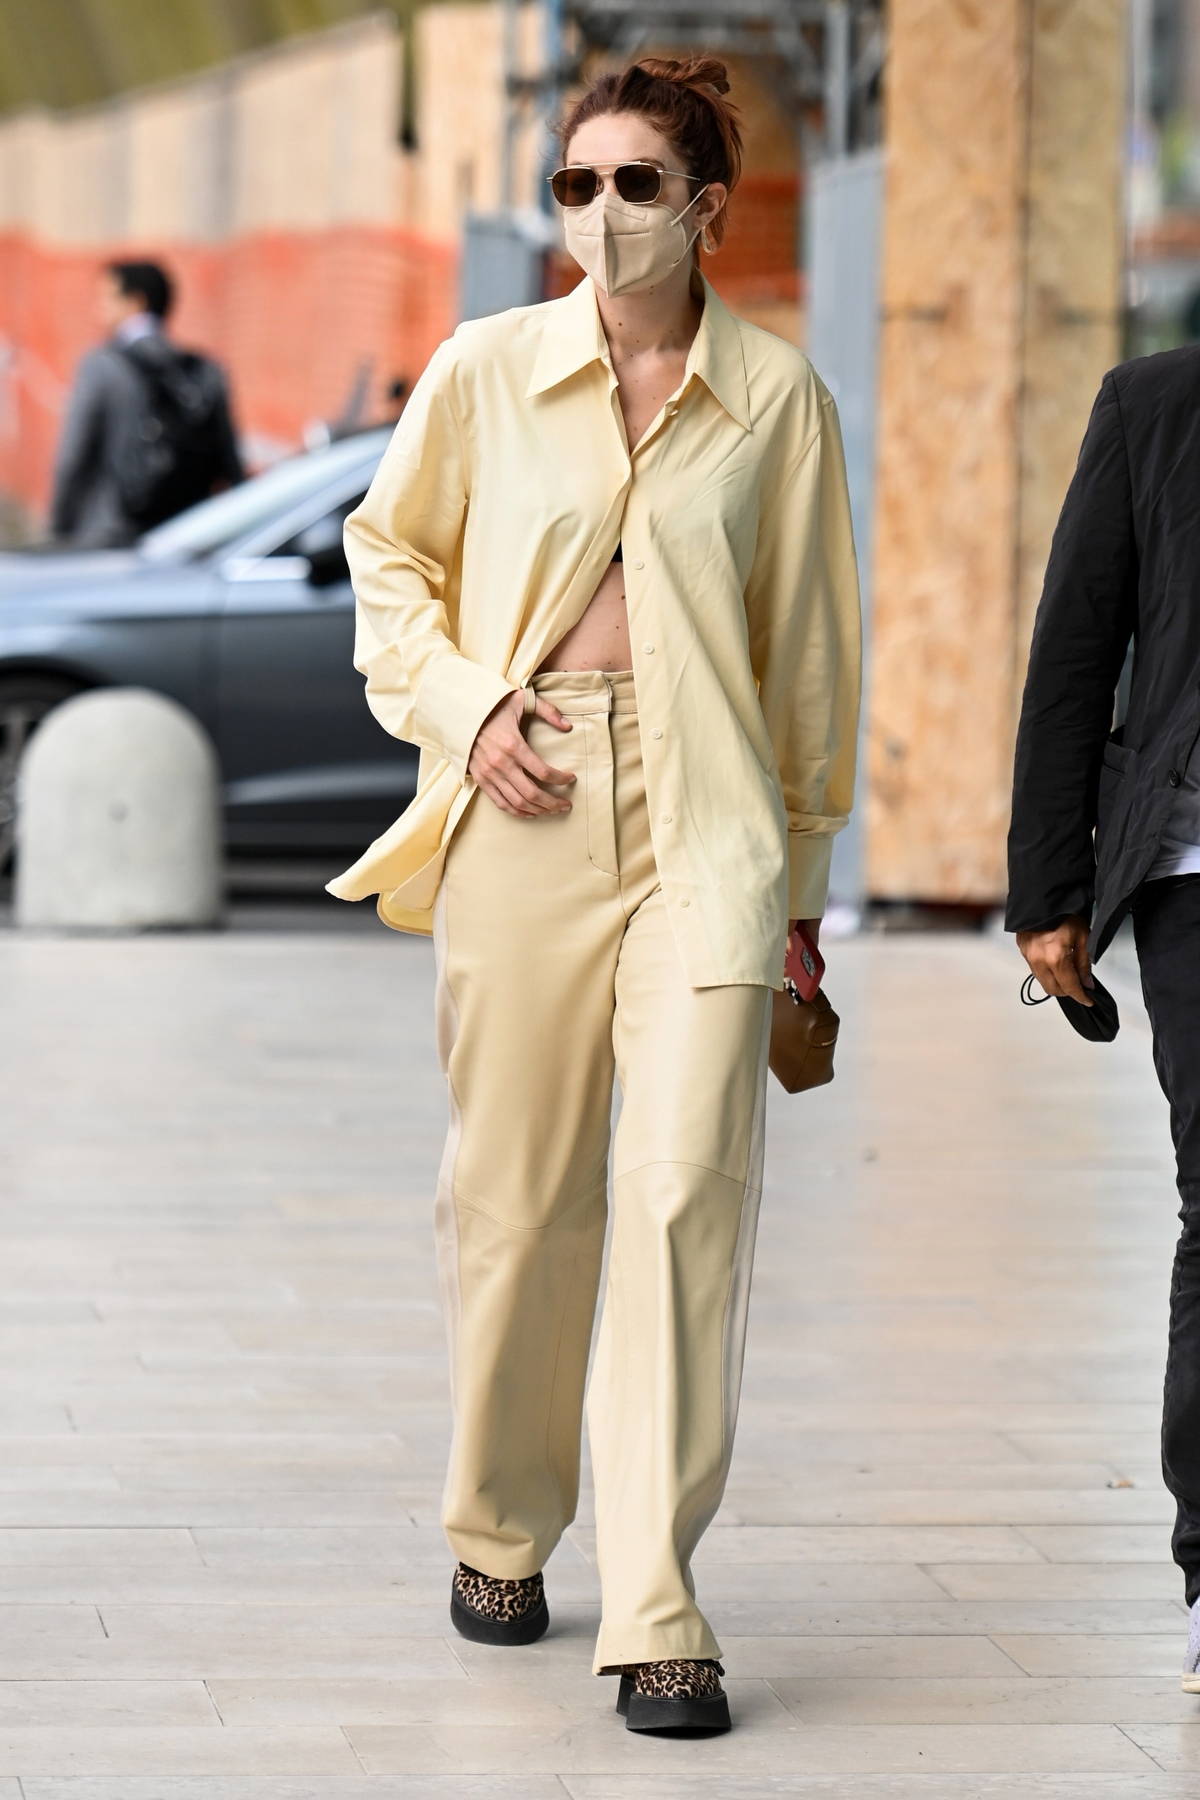 Gigi Hadid Wore a Leather Blazer to the Daily Front Row Fashion Awards